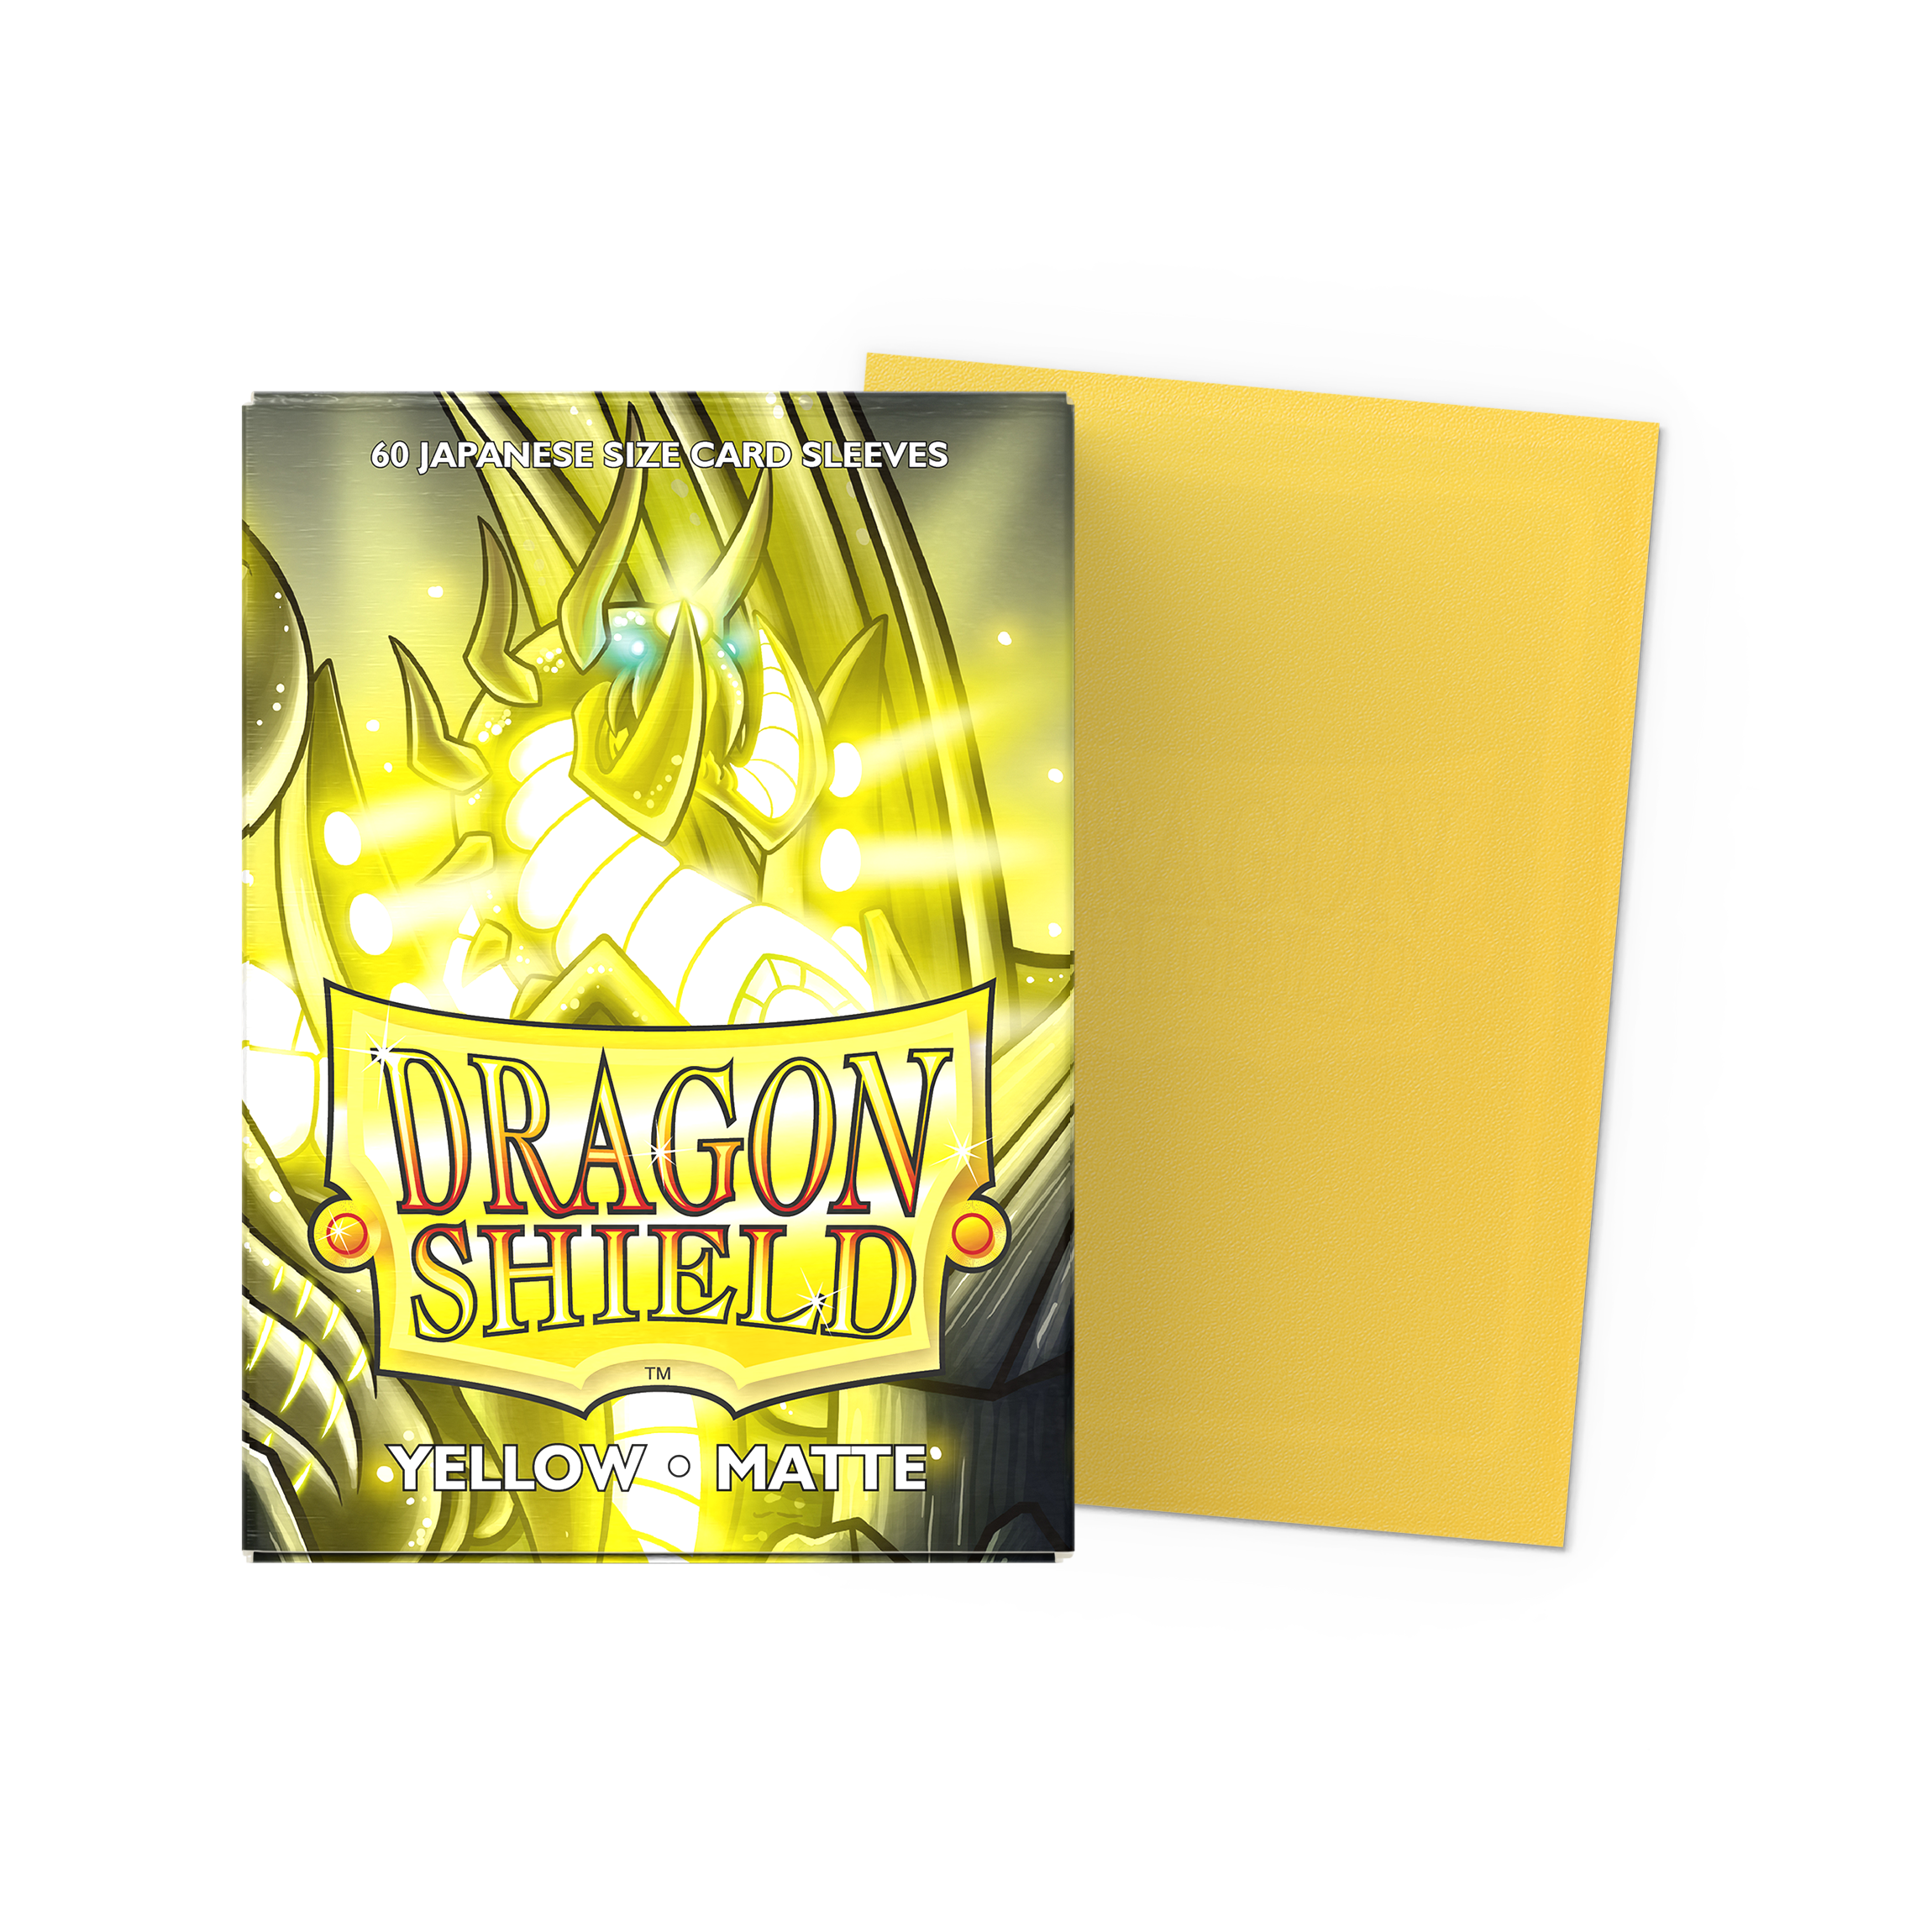 Dragon Shield: Matte Yellow (100) Protective Sleeves